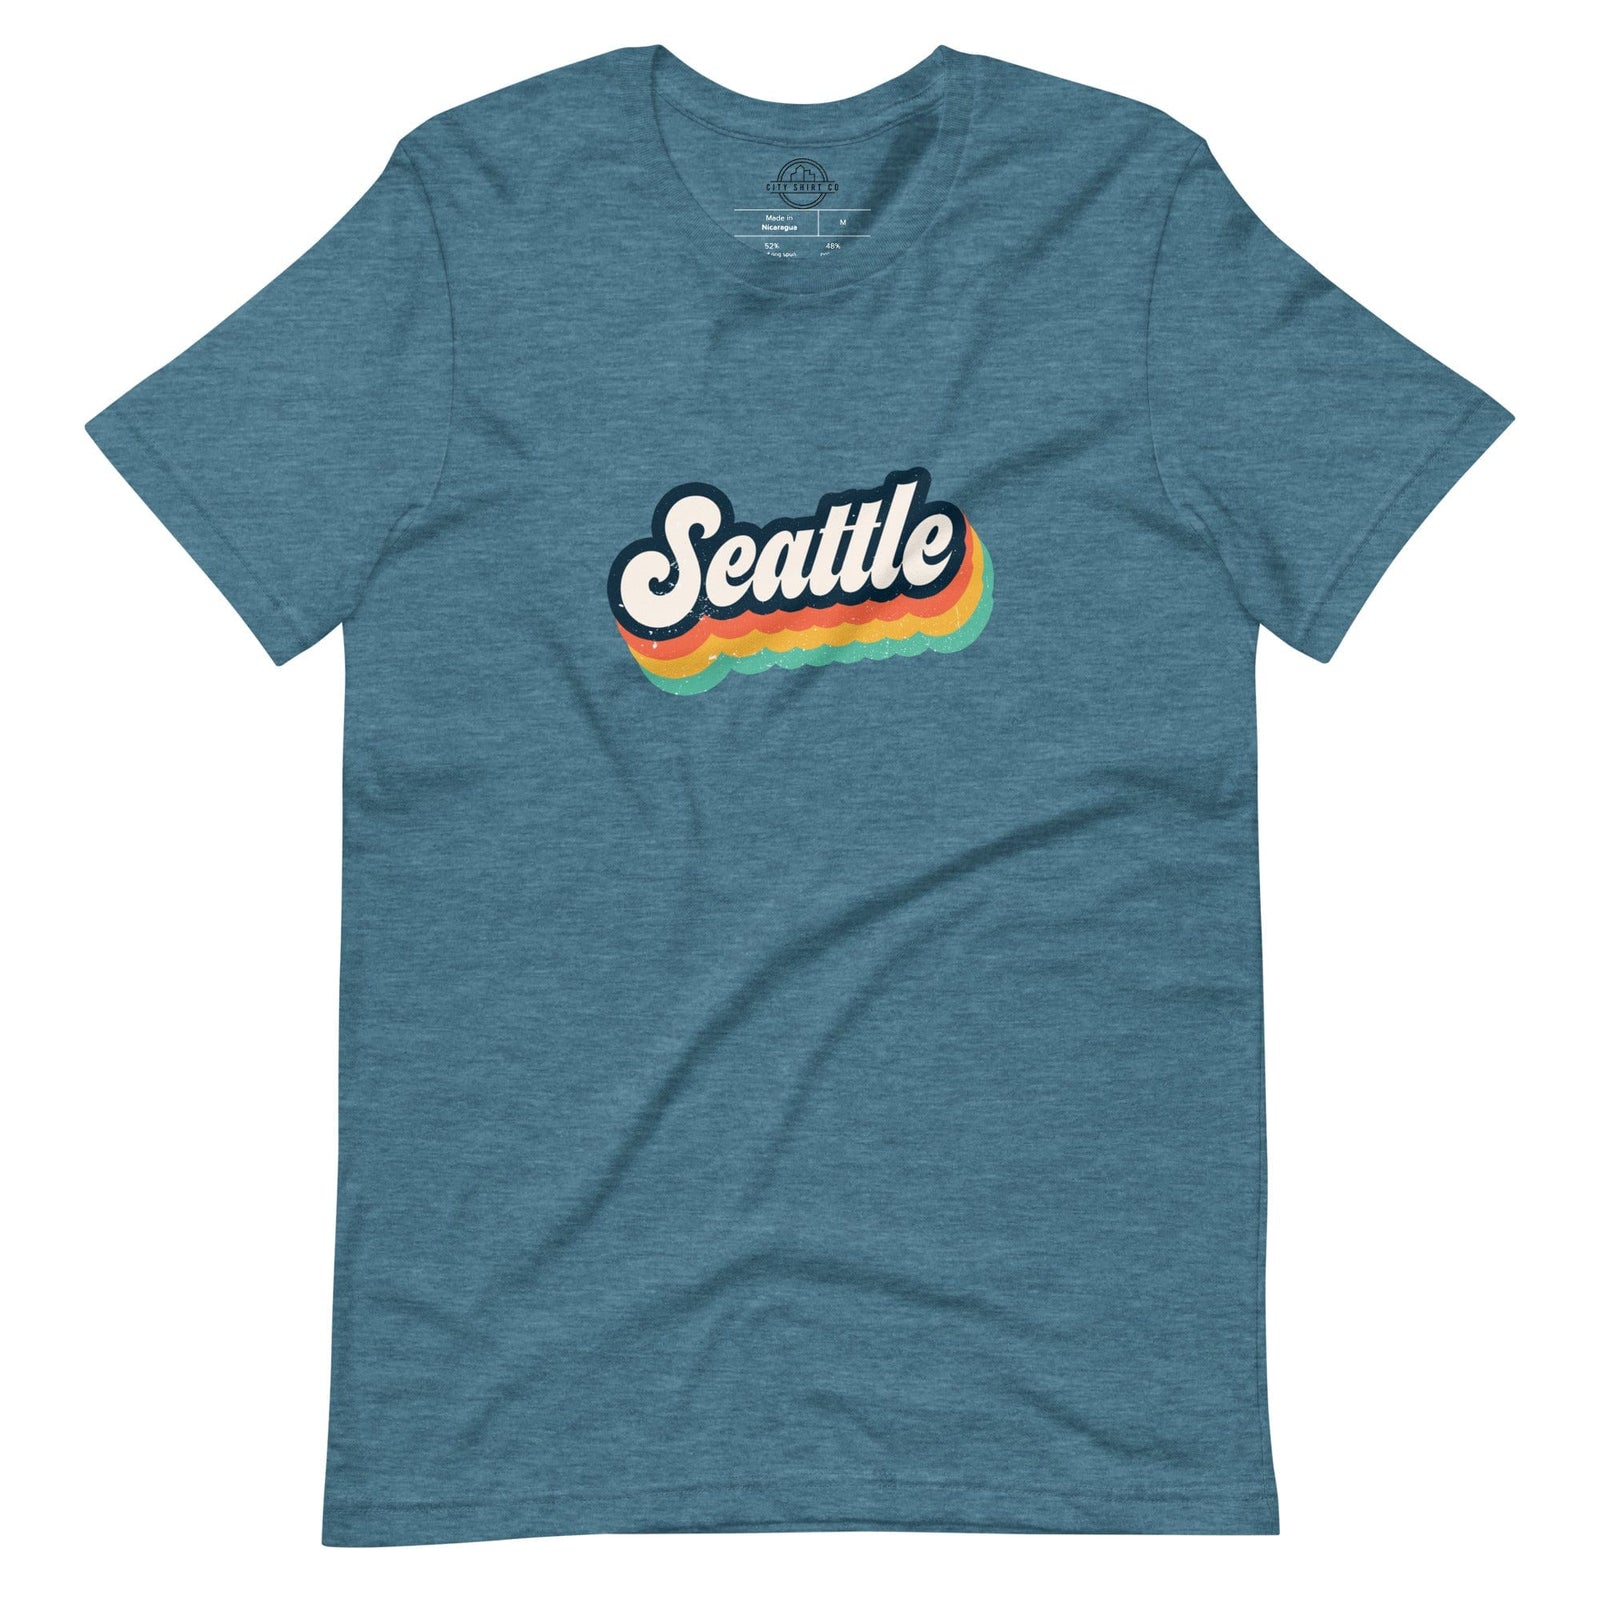 City Shirt Co Seattle Retro T-Shirt Heather Deep Teal / S